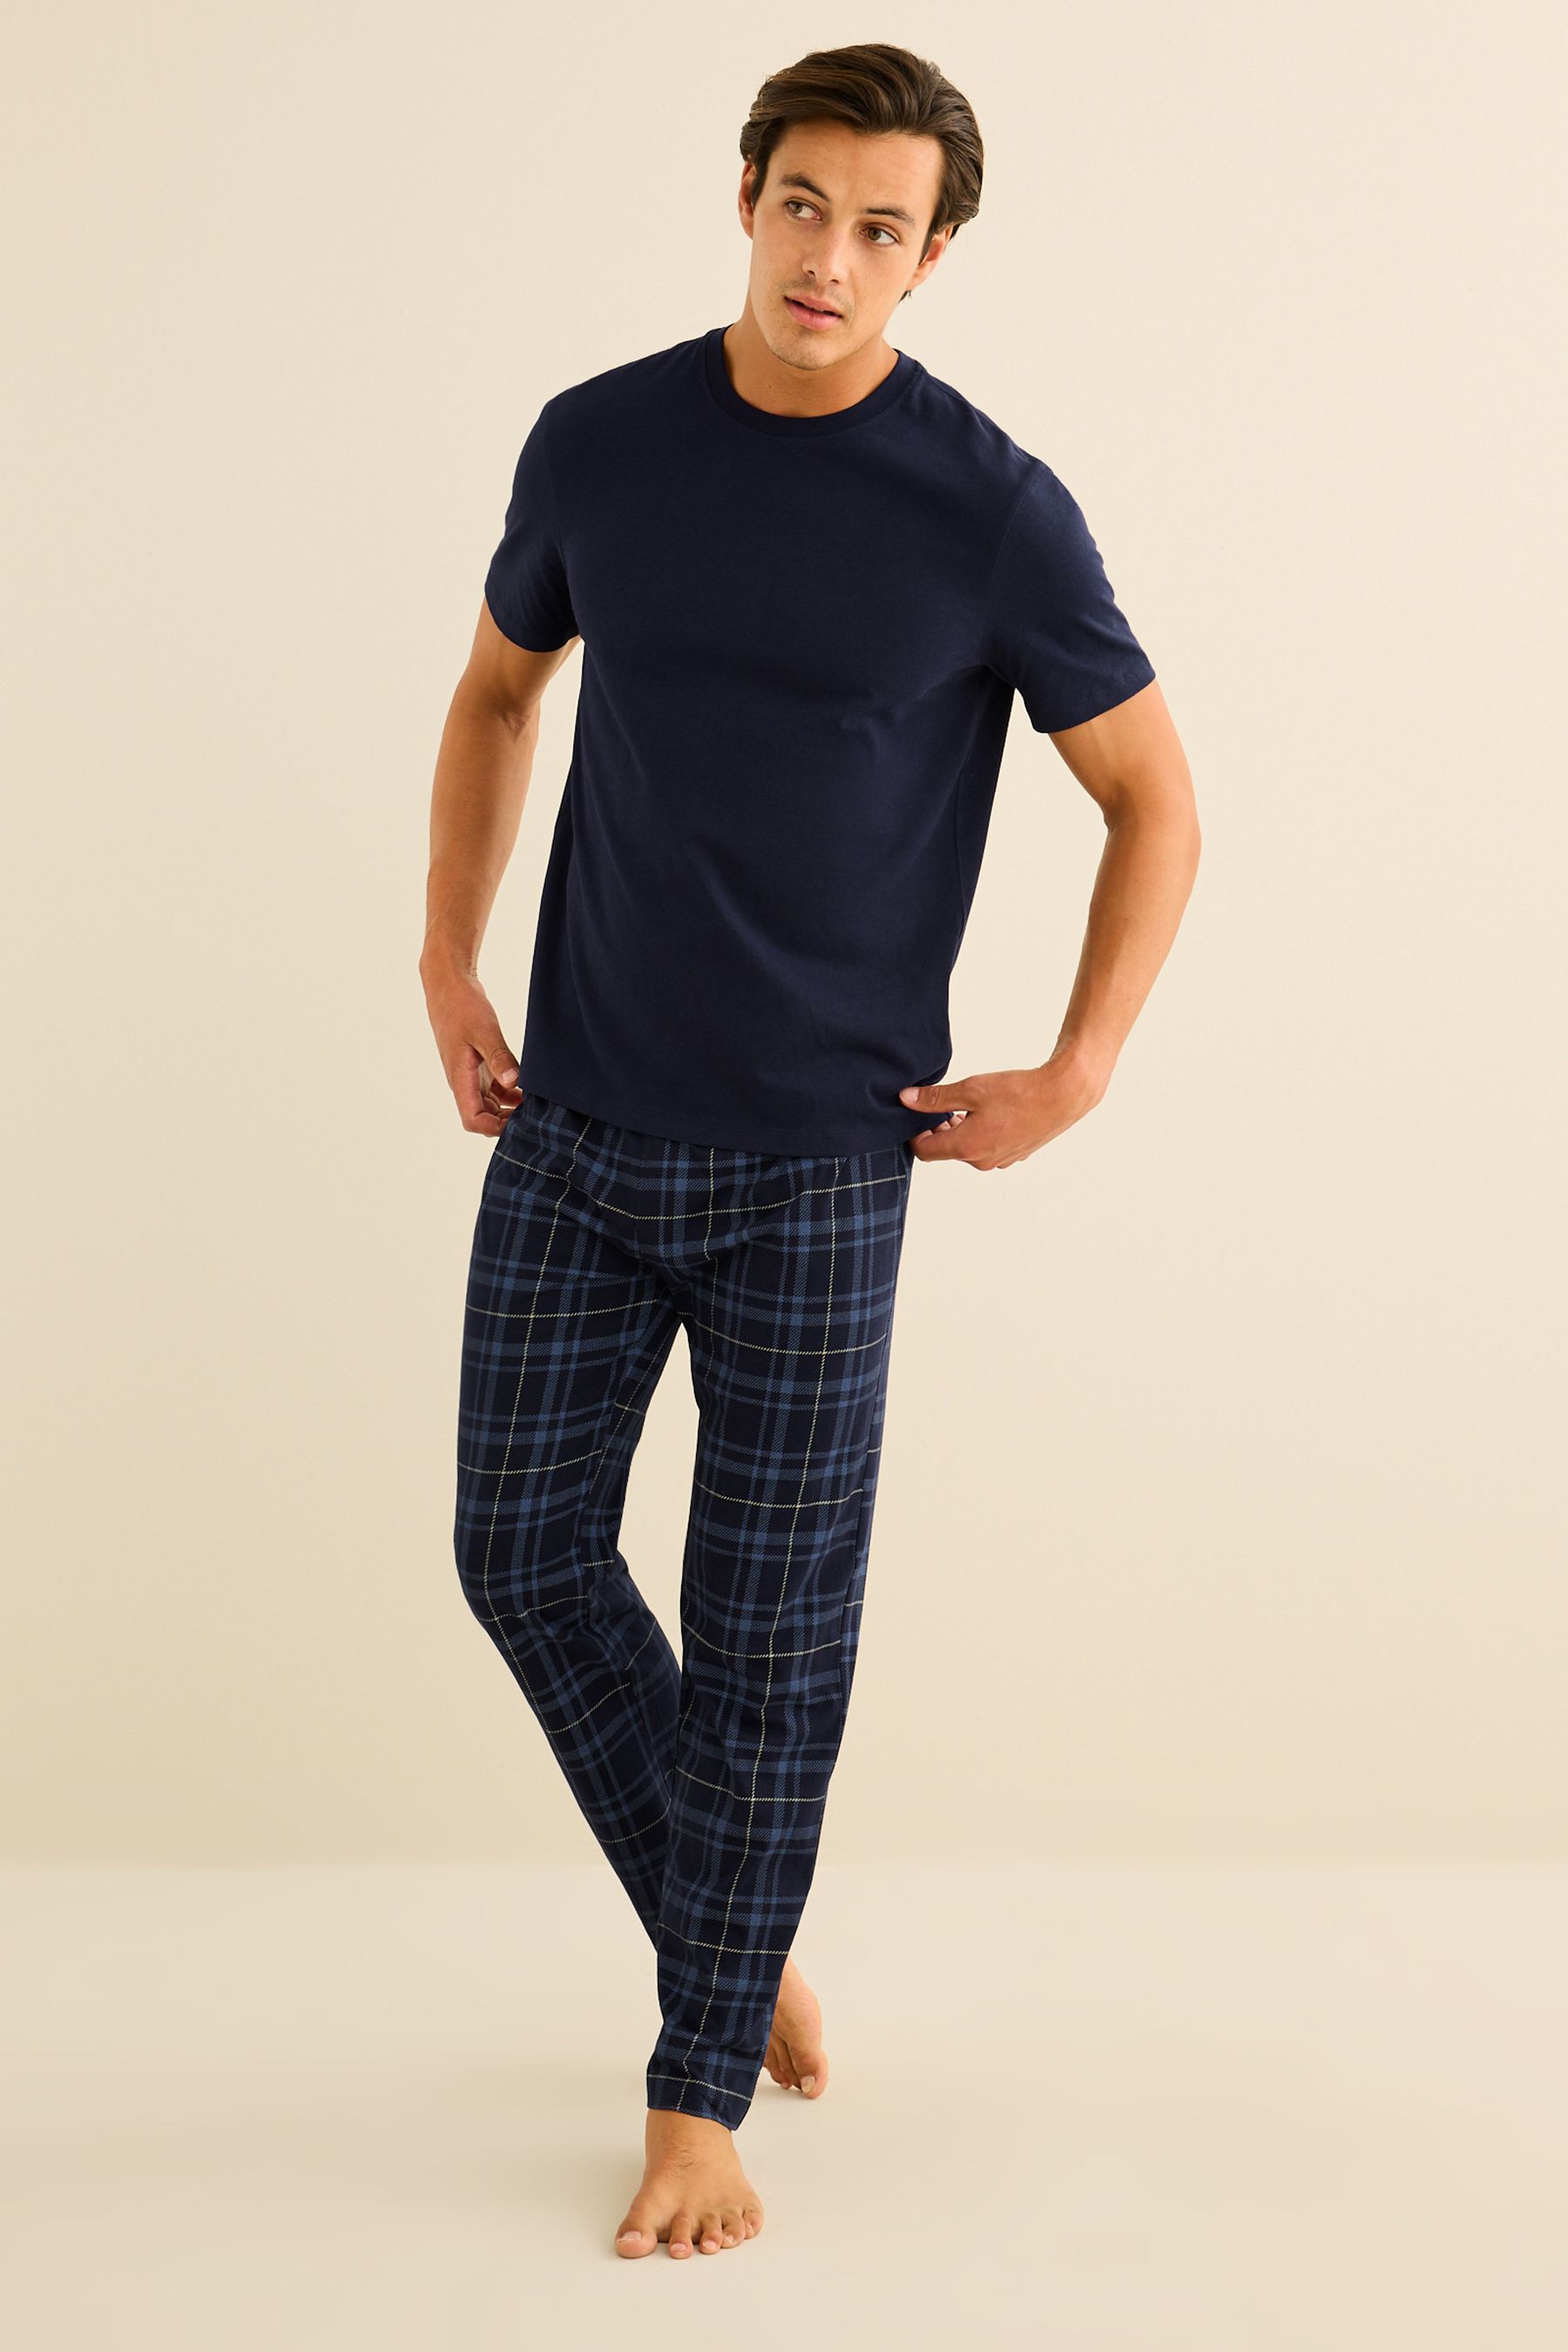 Buy Navy Blue Check Cotton Pyjamas Set from the Next UK online shop